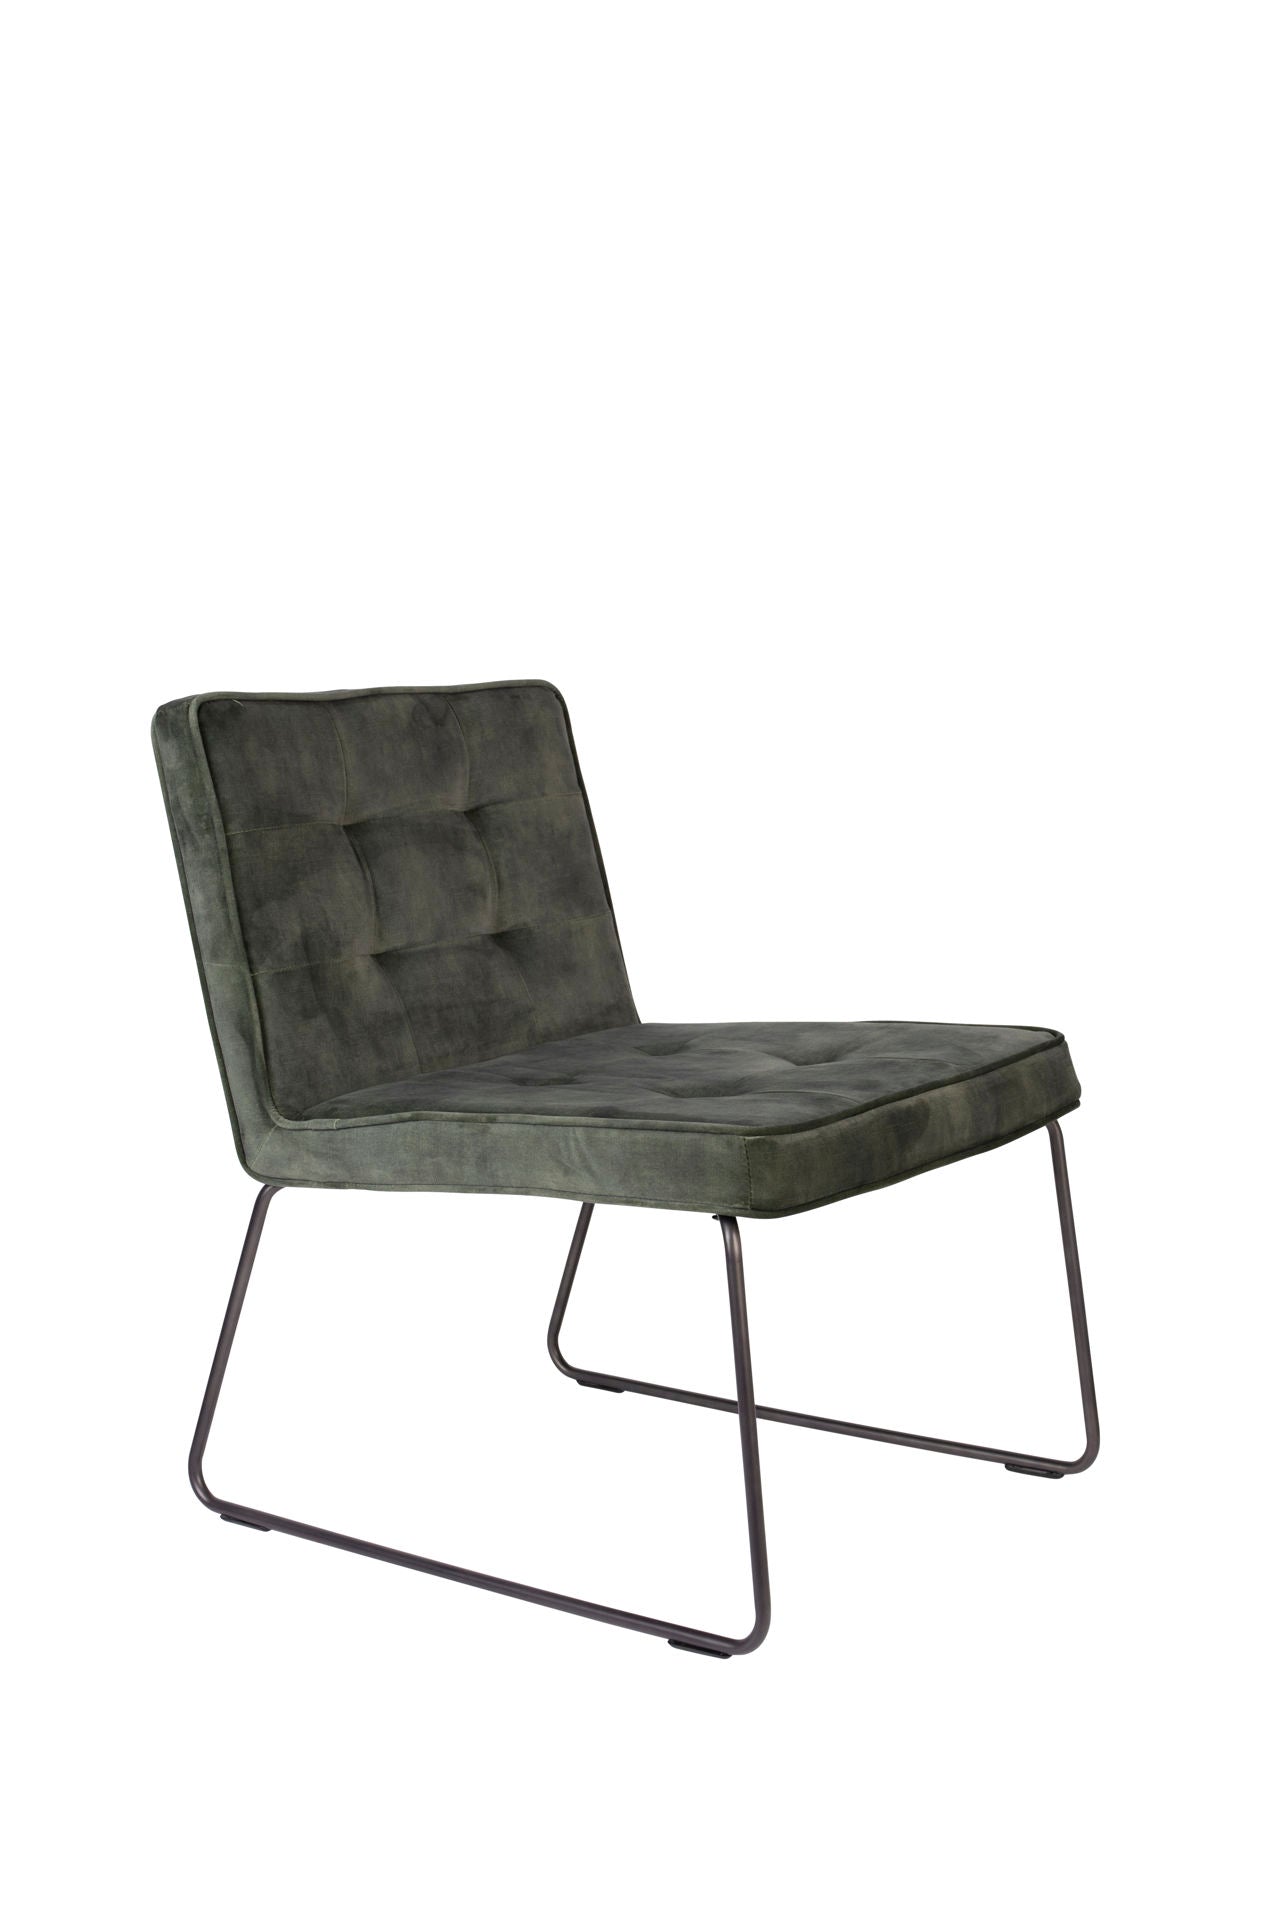 Nancy's Gold Canyon Lounge Chair - Industriel - Vert - Polyester, Contreplaqué, Métal - 69 cm x 55,5 cm x 75 cm